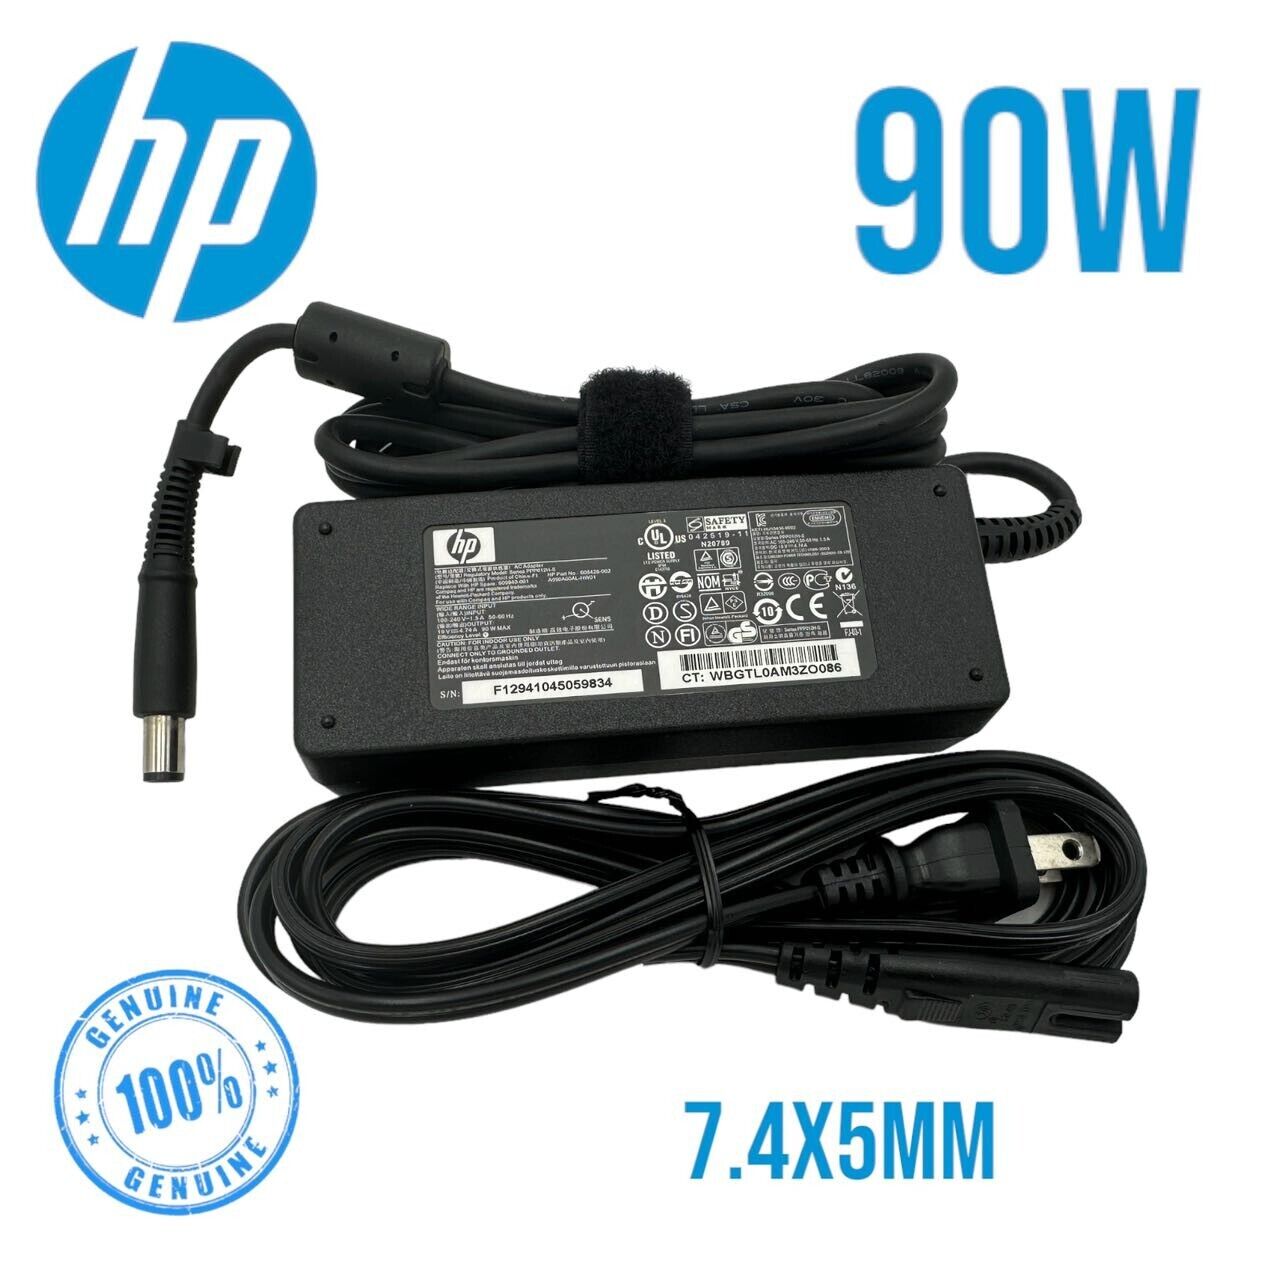 Genuine HP 90W AC Adapter Power Supply EliteDesk Desktop Mini 705 800 G1 G2 G3